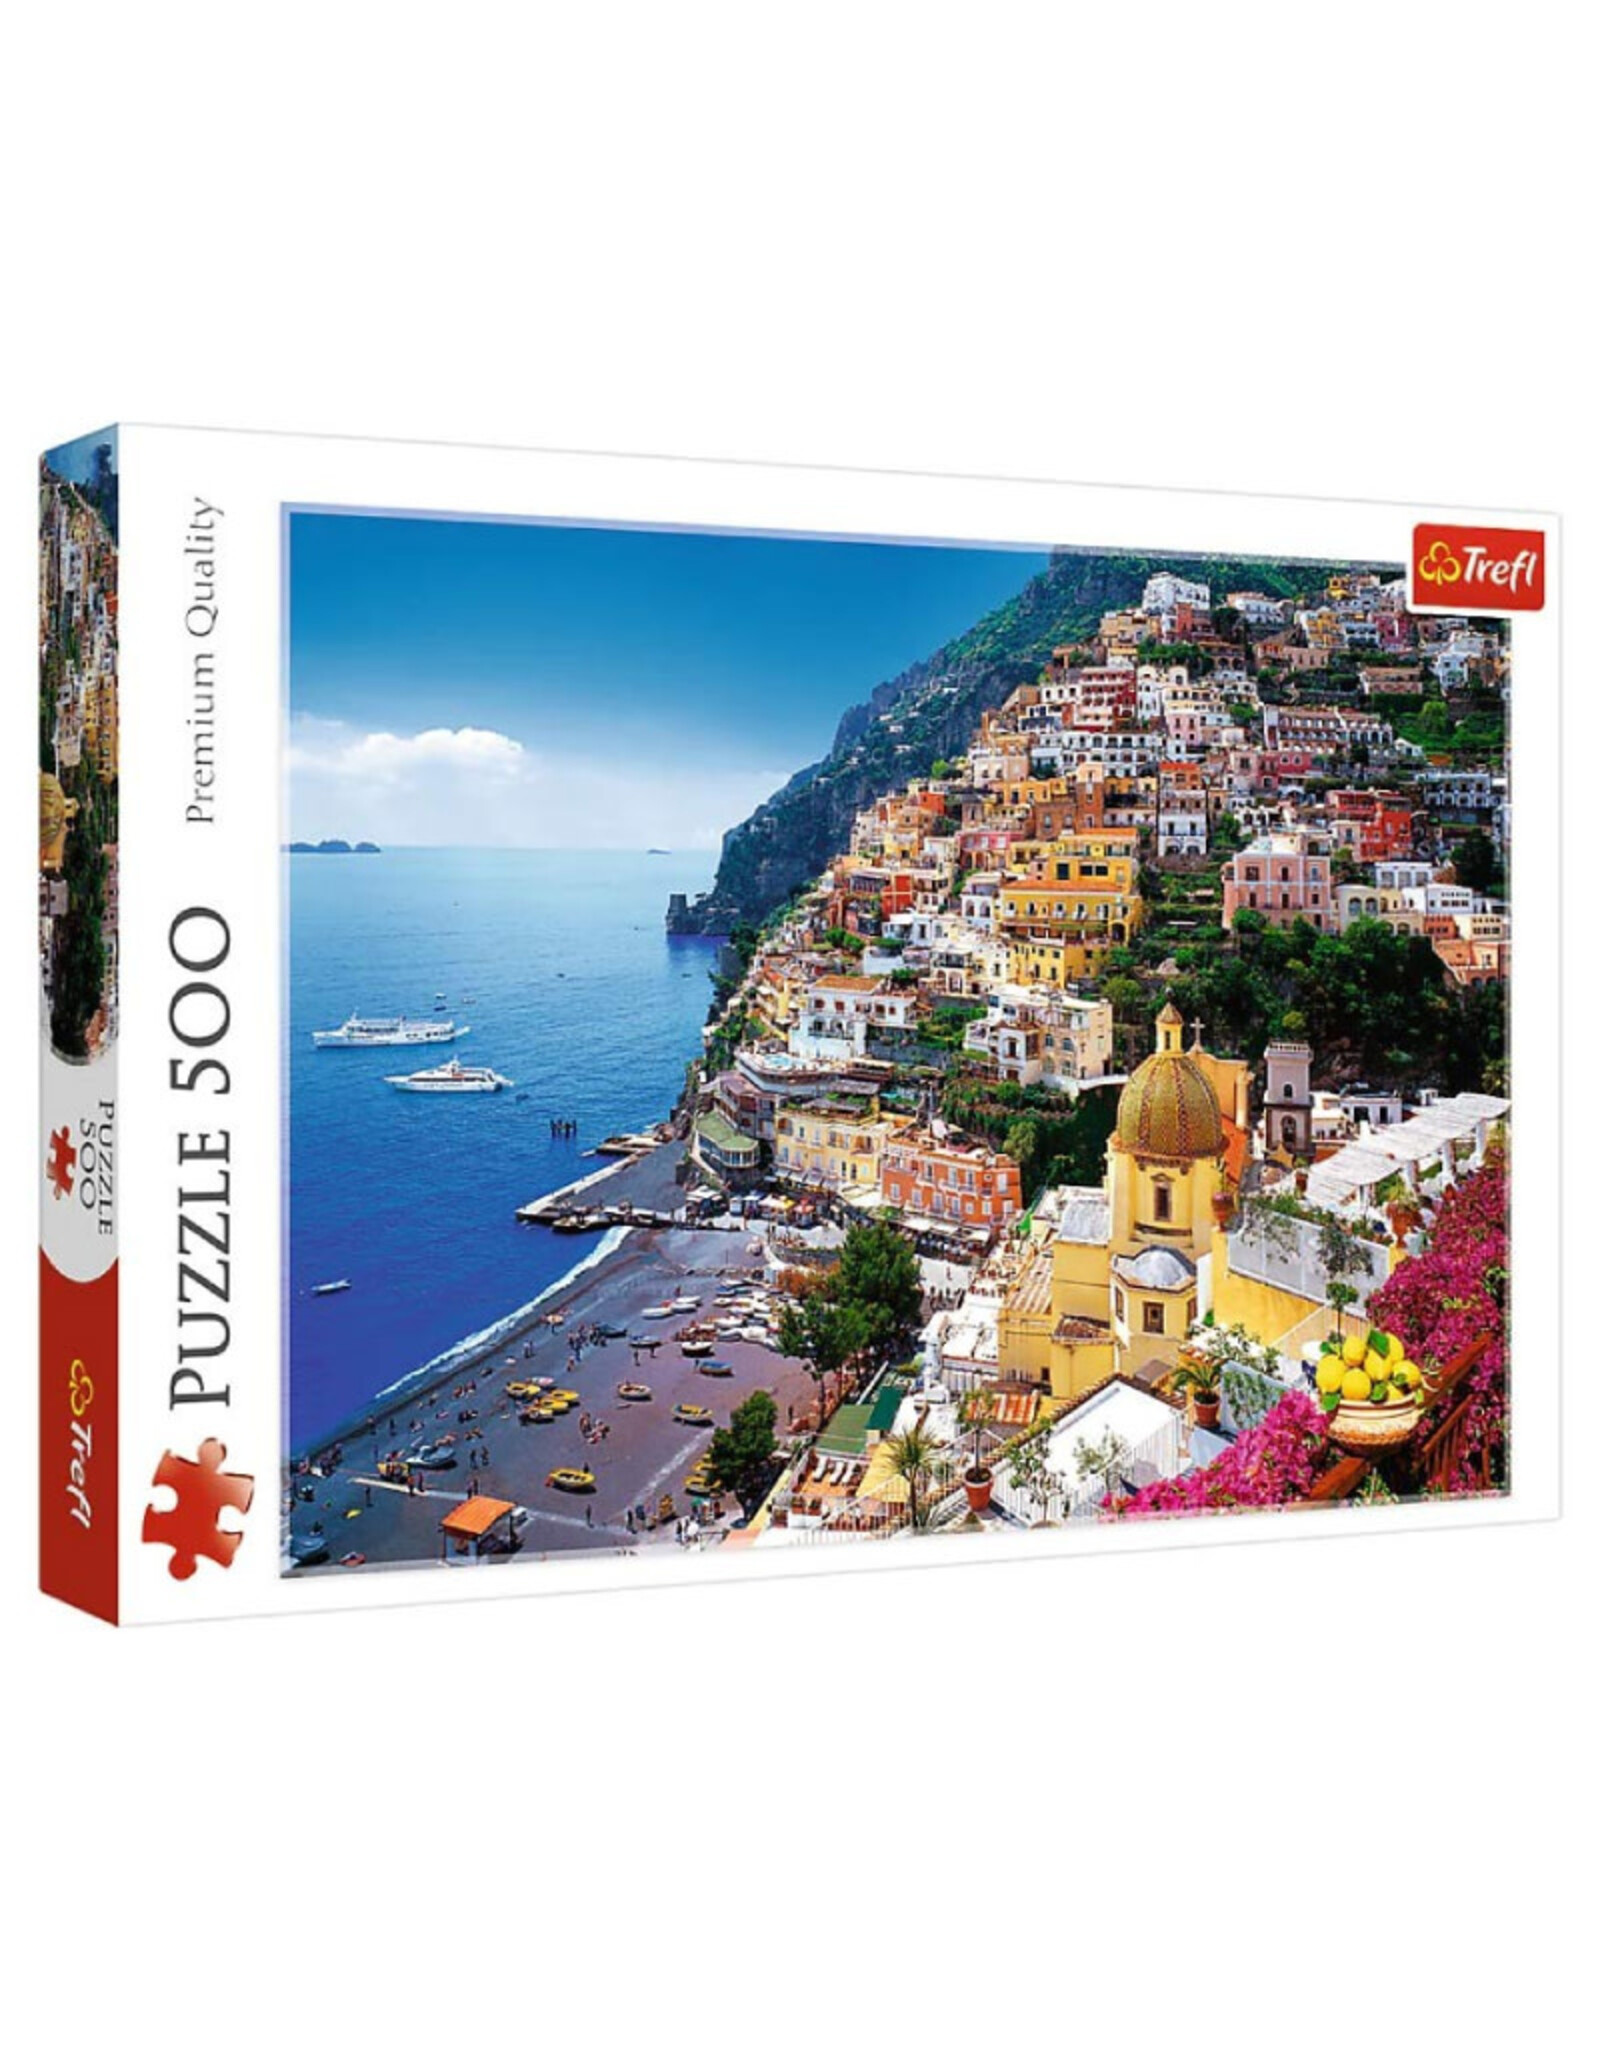 Trefl Positano Italy Puzzle 500 PCS